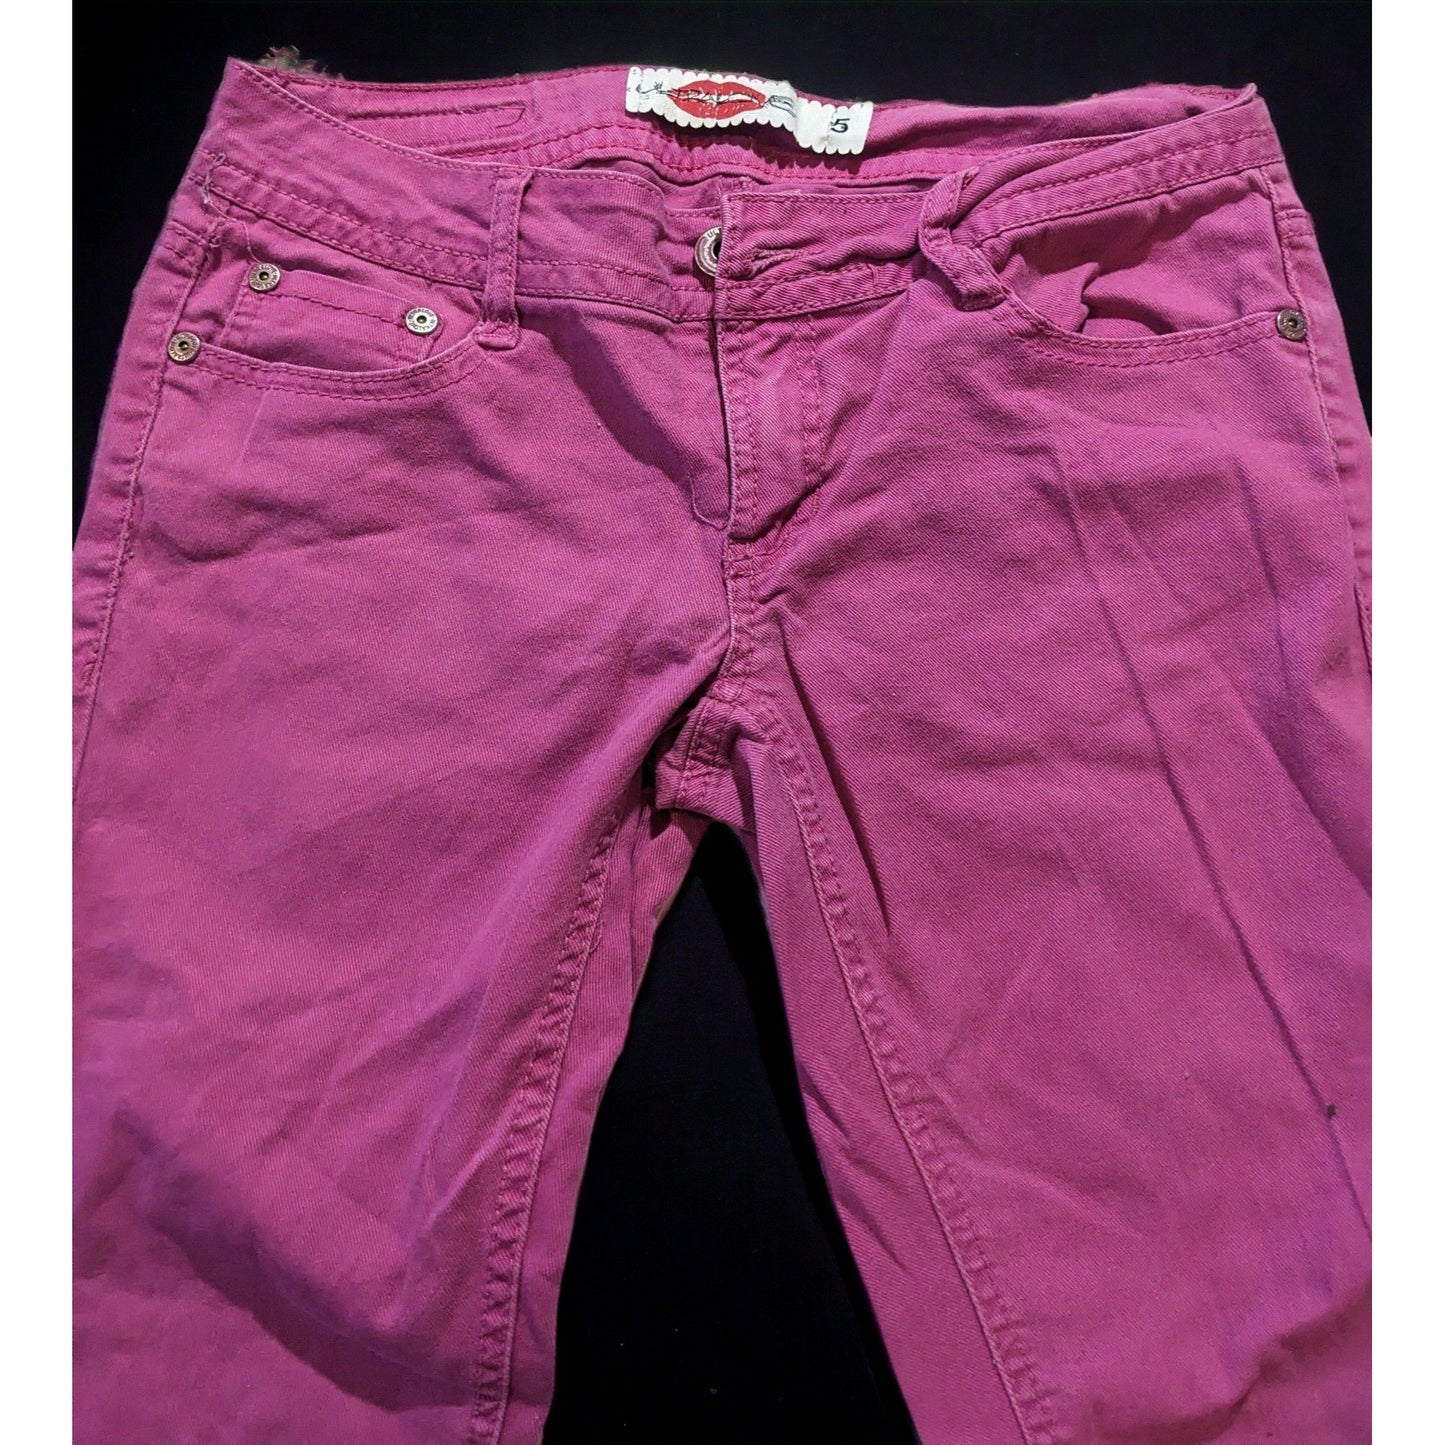 Ultralove Rose Pink Jeans